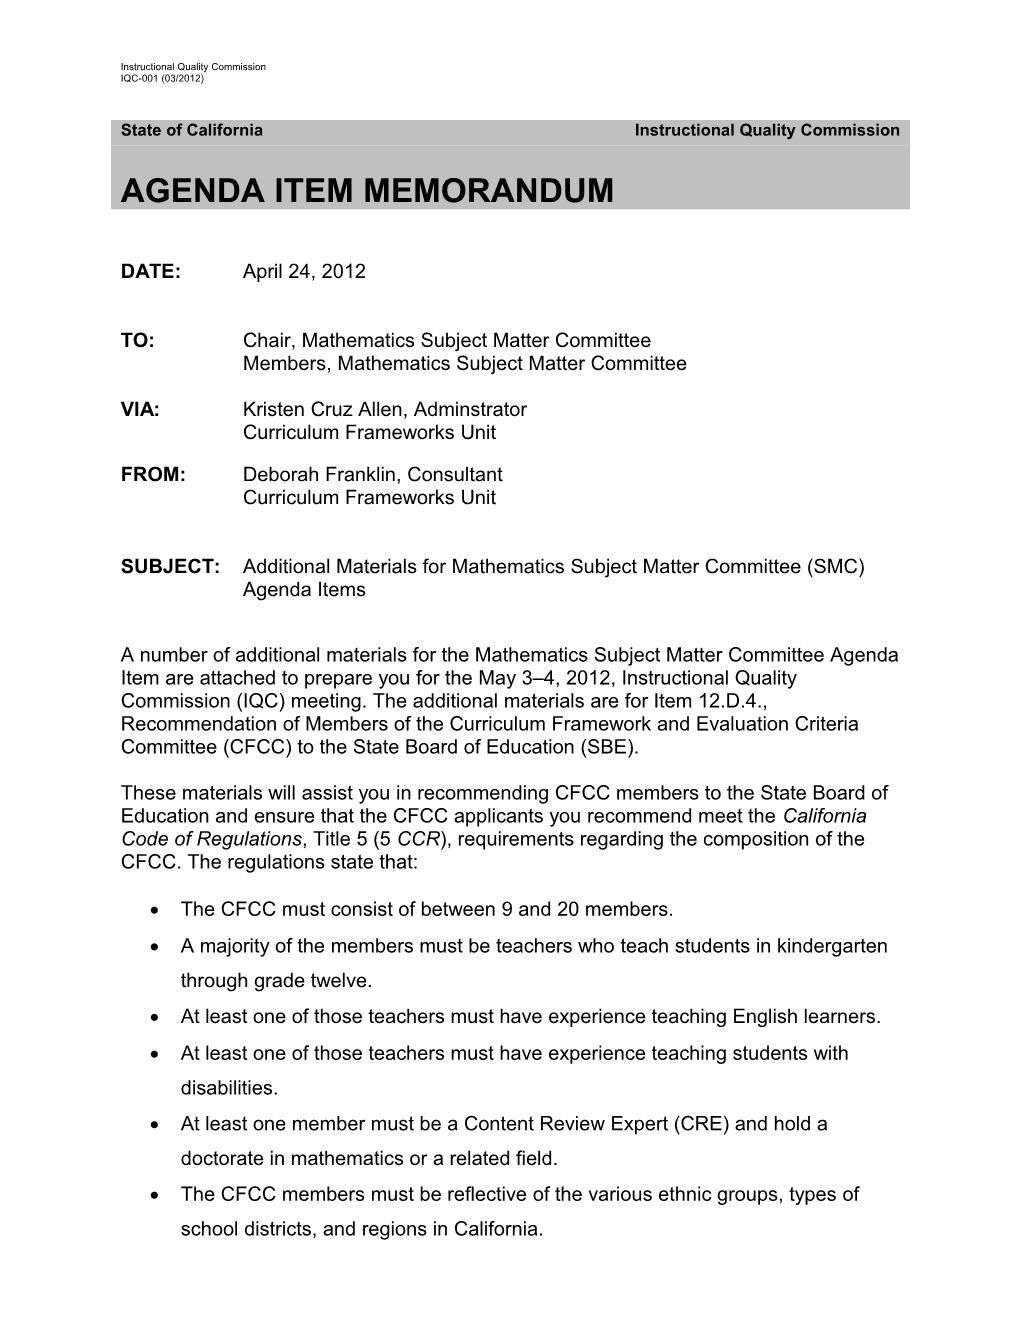 Agenda Memorandum April 24, 2012 - Instructional Quality Commission (CA Dept of Education)